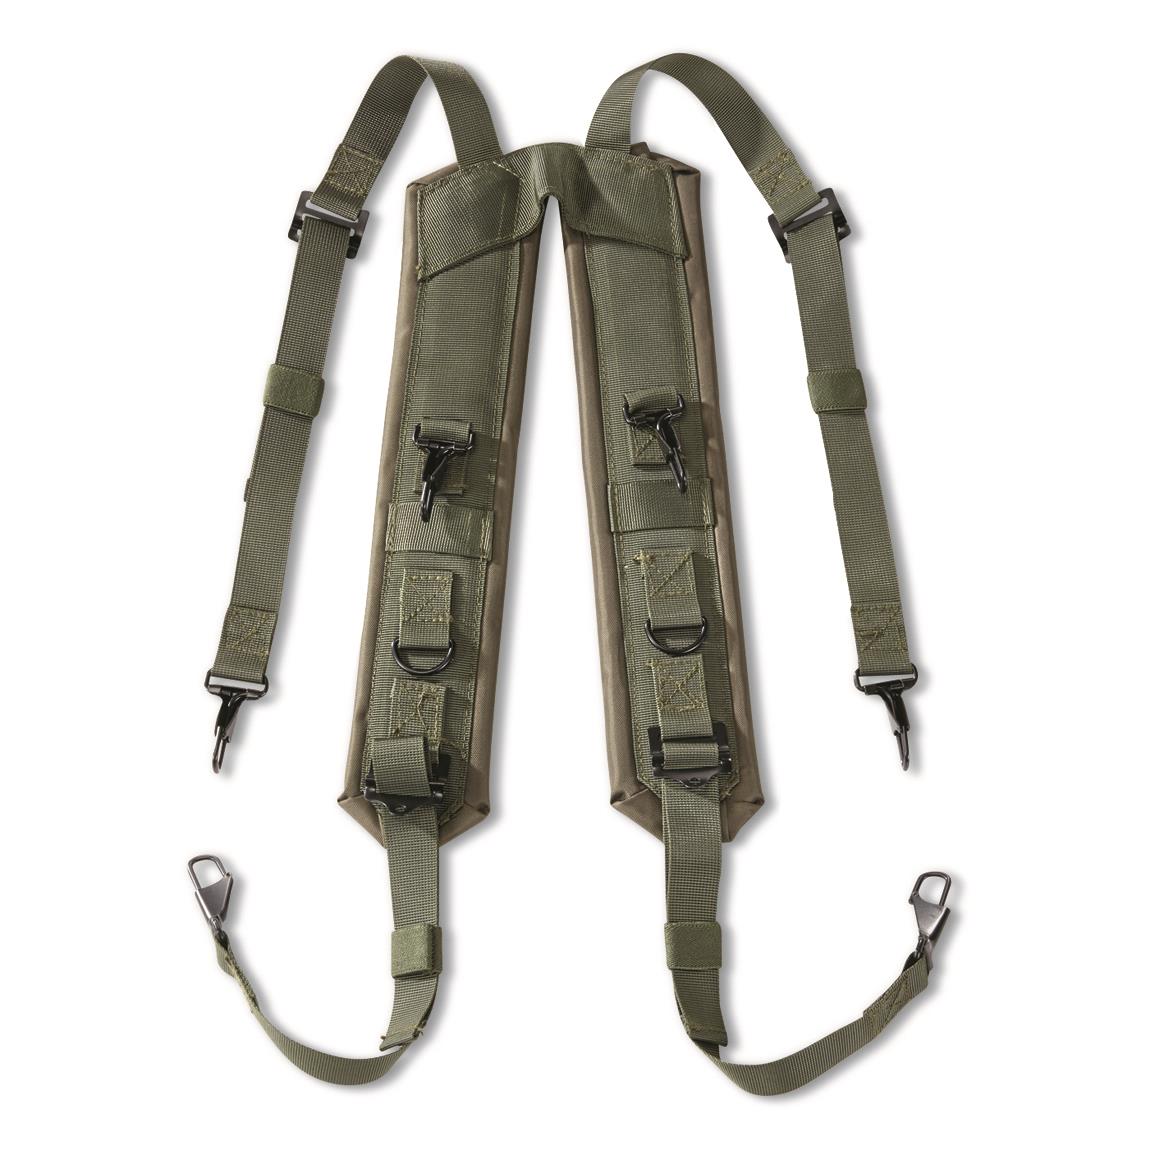 Chinese Military Surplus Nylon Padded Suspenders, 3 Pack, New, Olive Drab